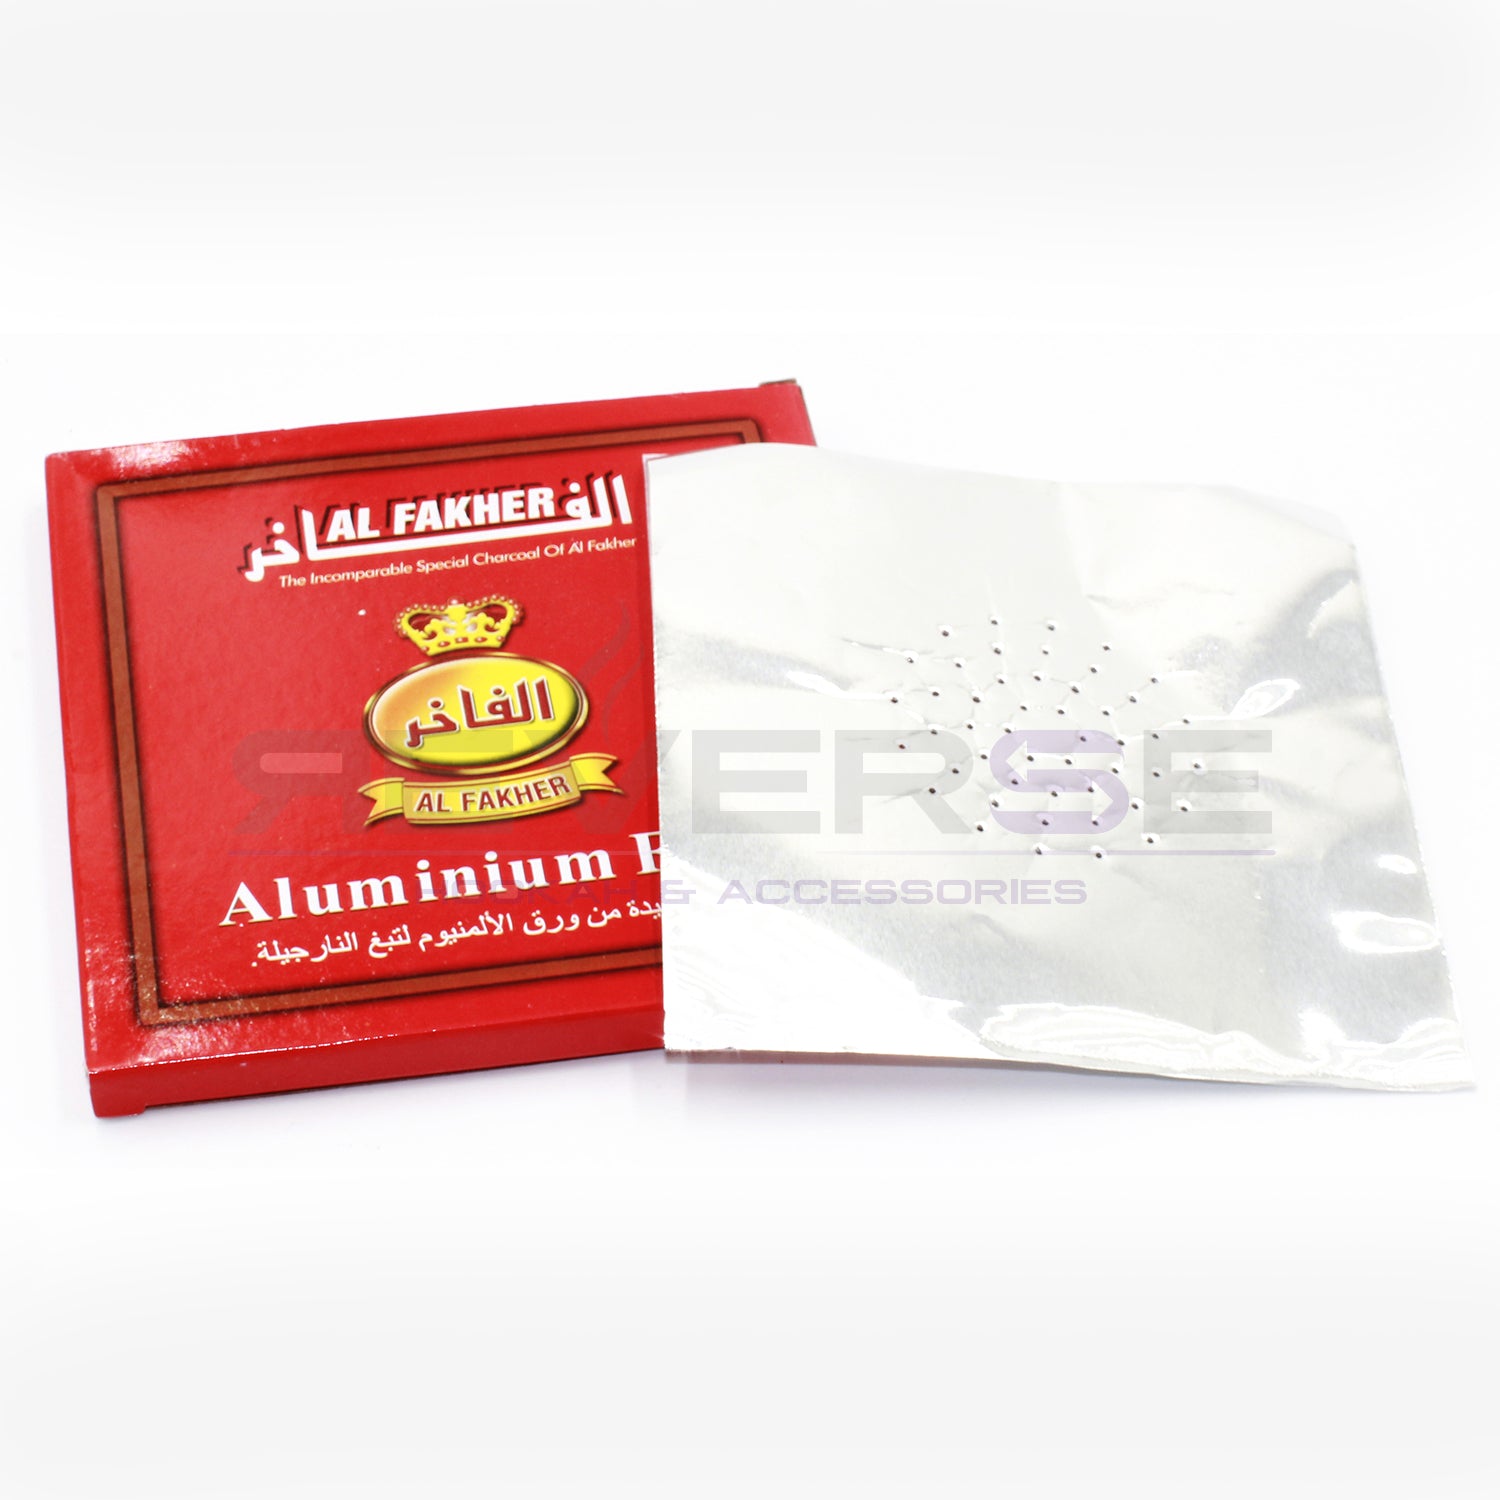 Alfakher - Pre-punched and pre-cut Aluminum foil